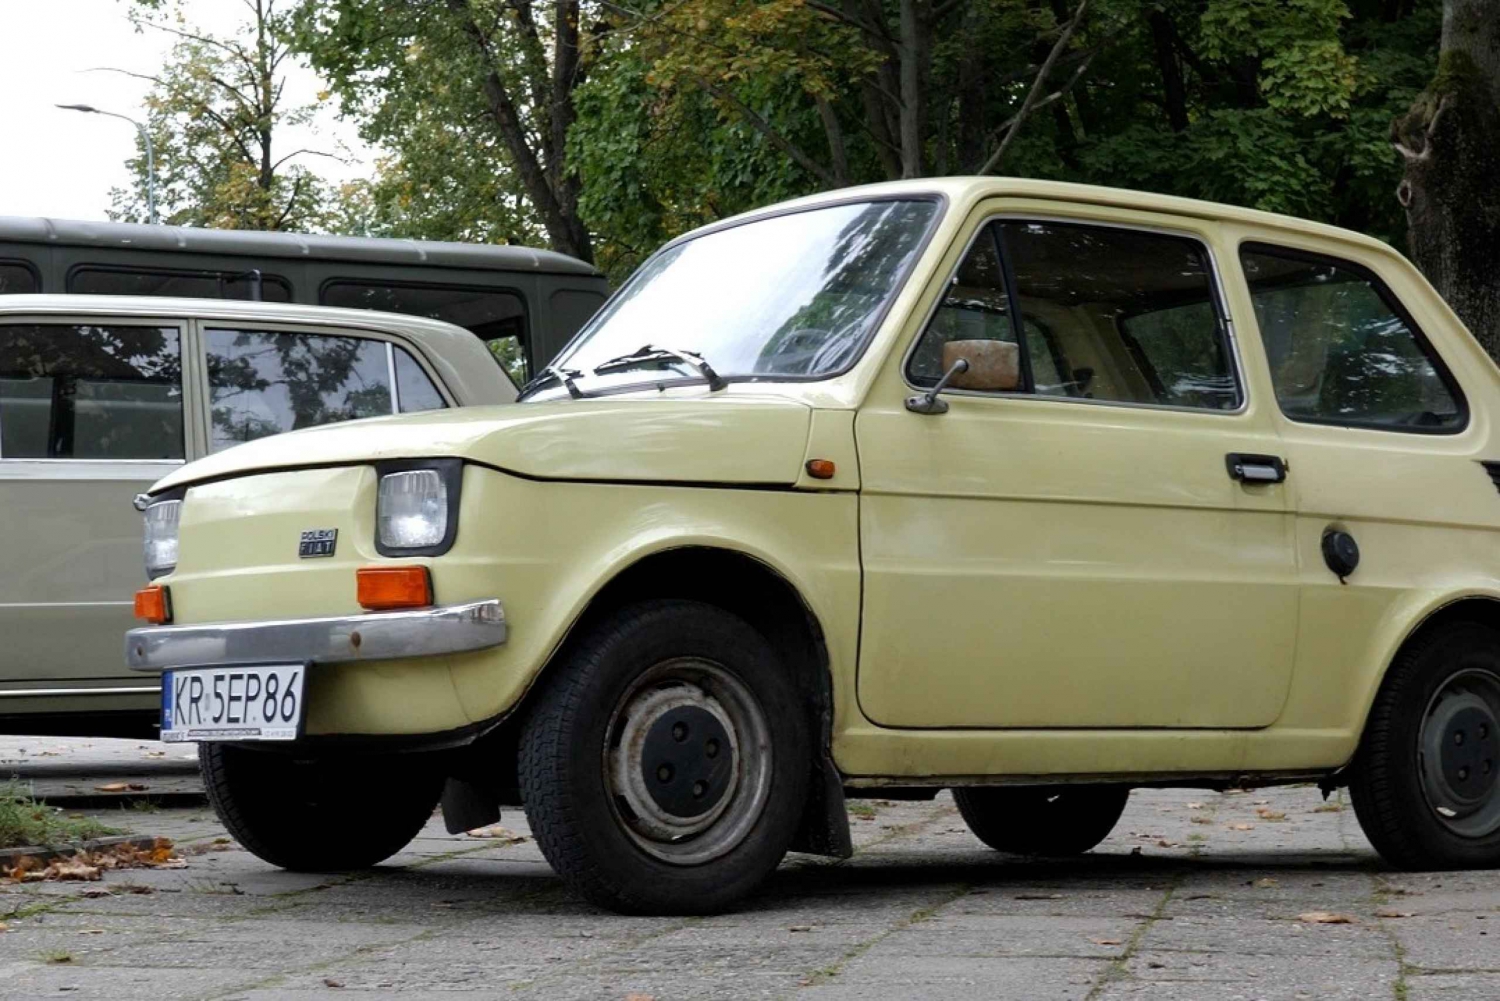 Krakow: Guided Tour of Nowa Huta in Communist-Era Cars